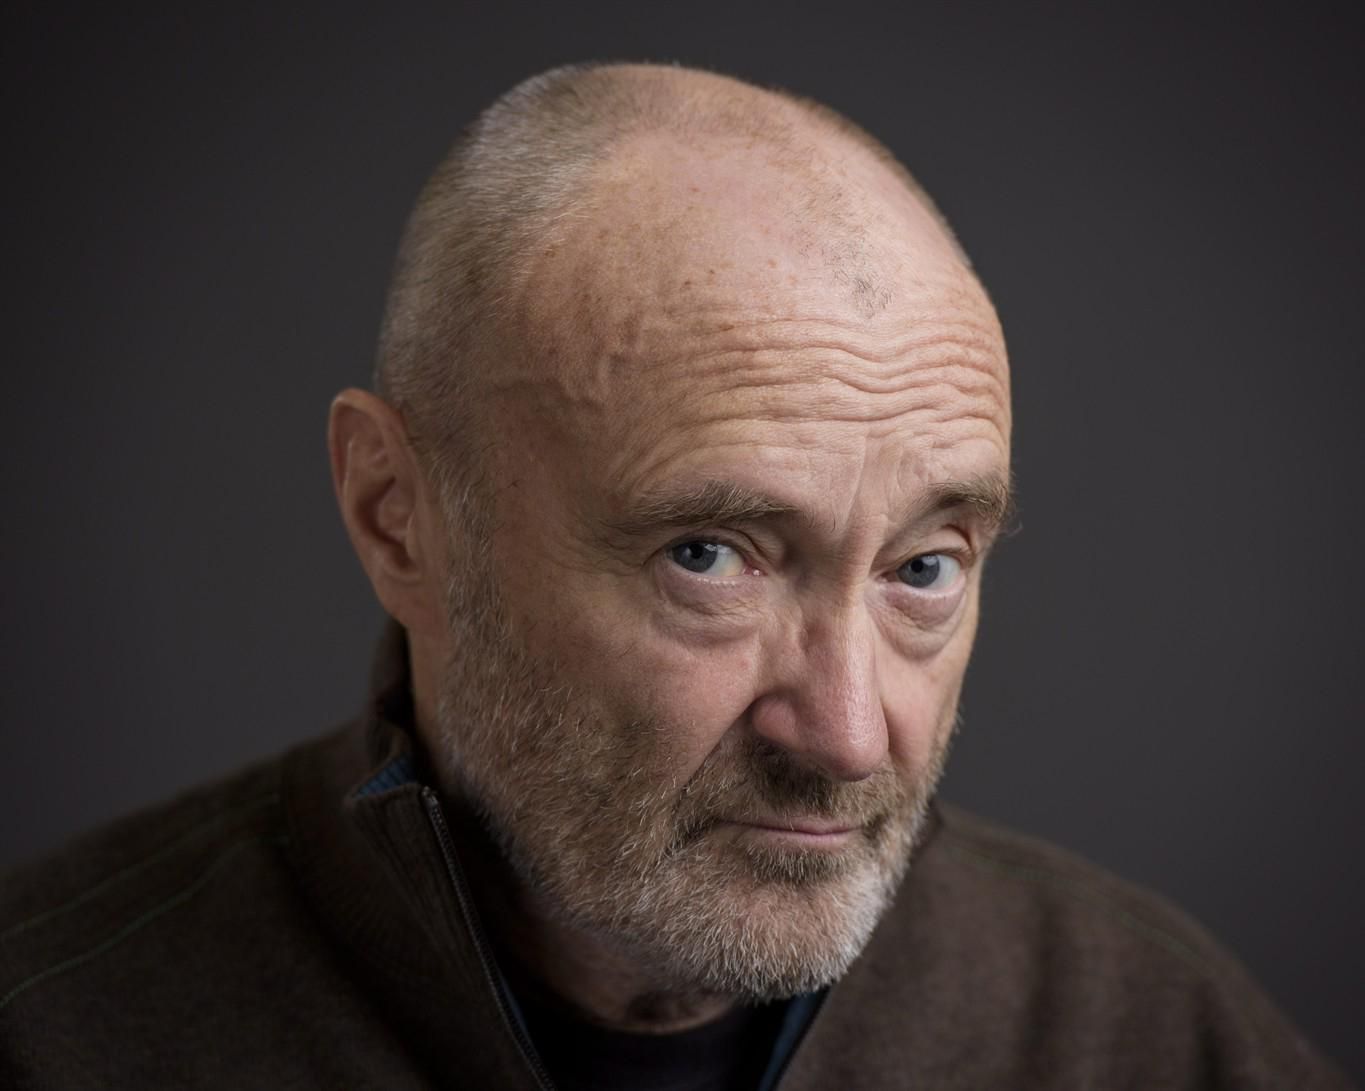 Phil Collins . Against All Odds (Tradução) 